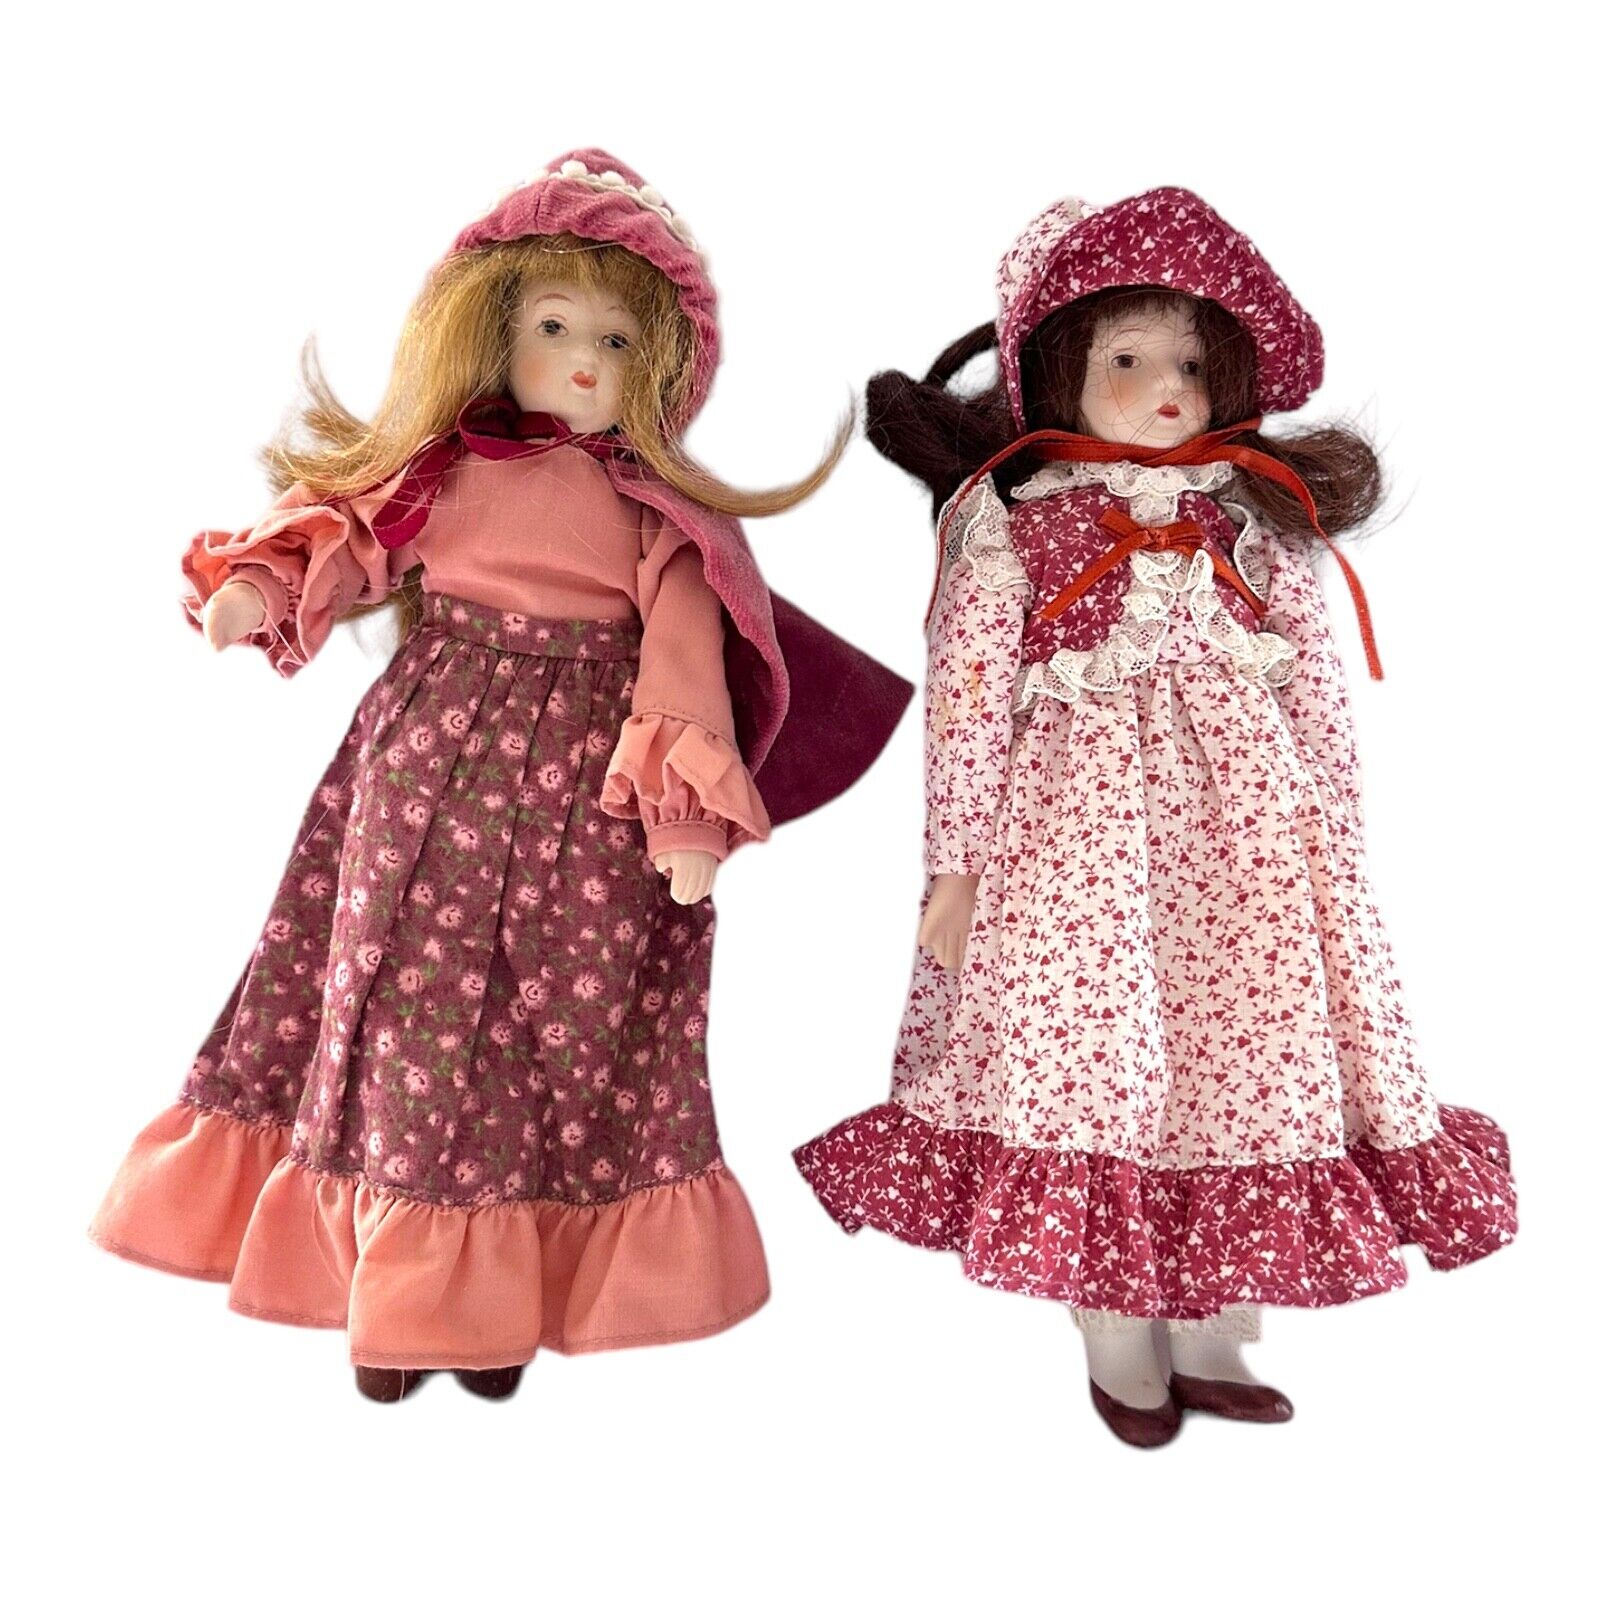 2 Vintage Russ Berrie Months to Remember Dolls September #1593 & November #1595